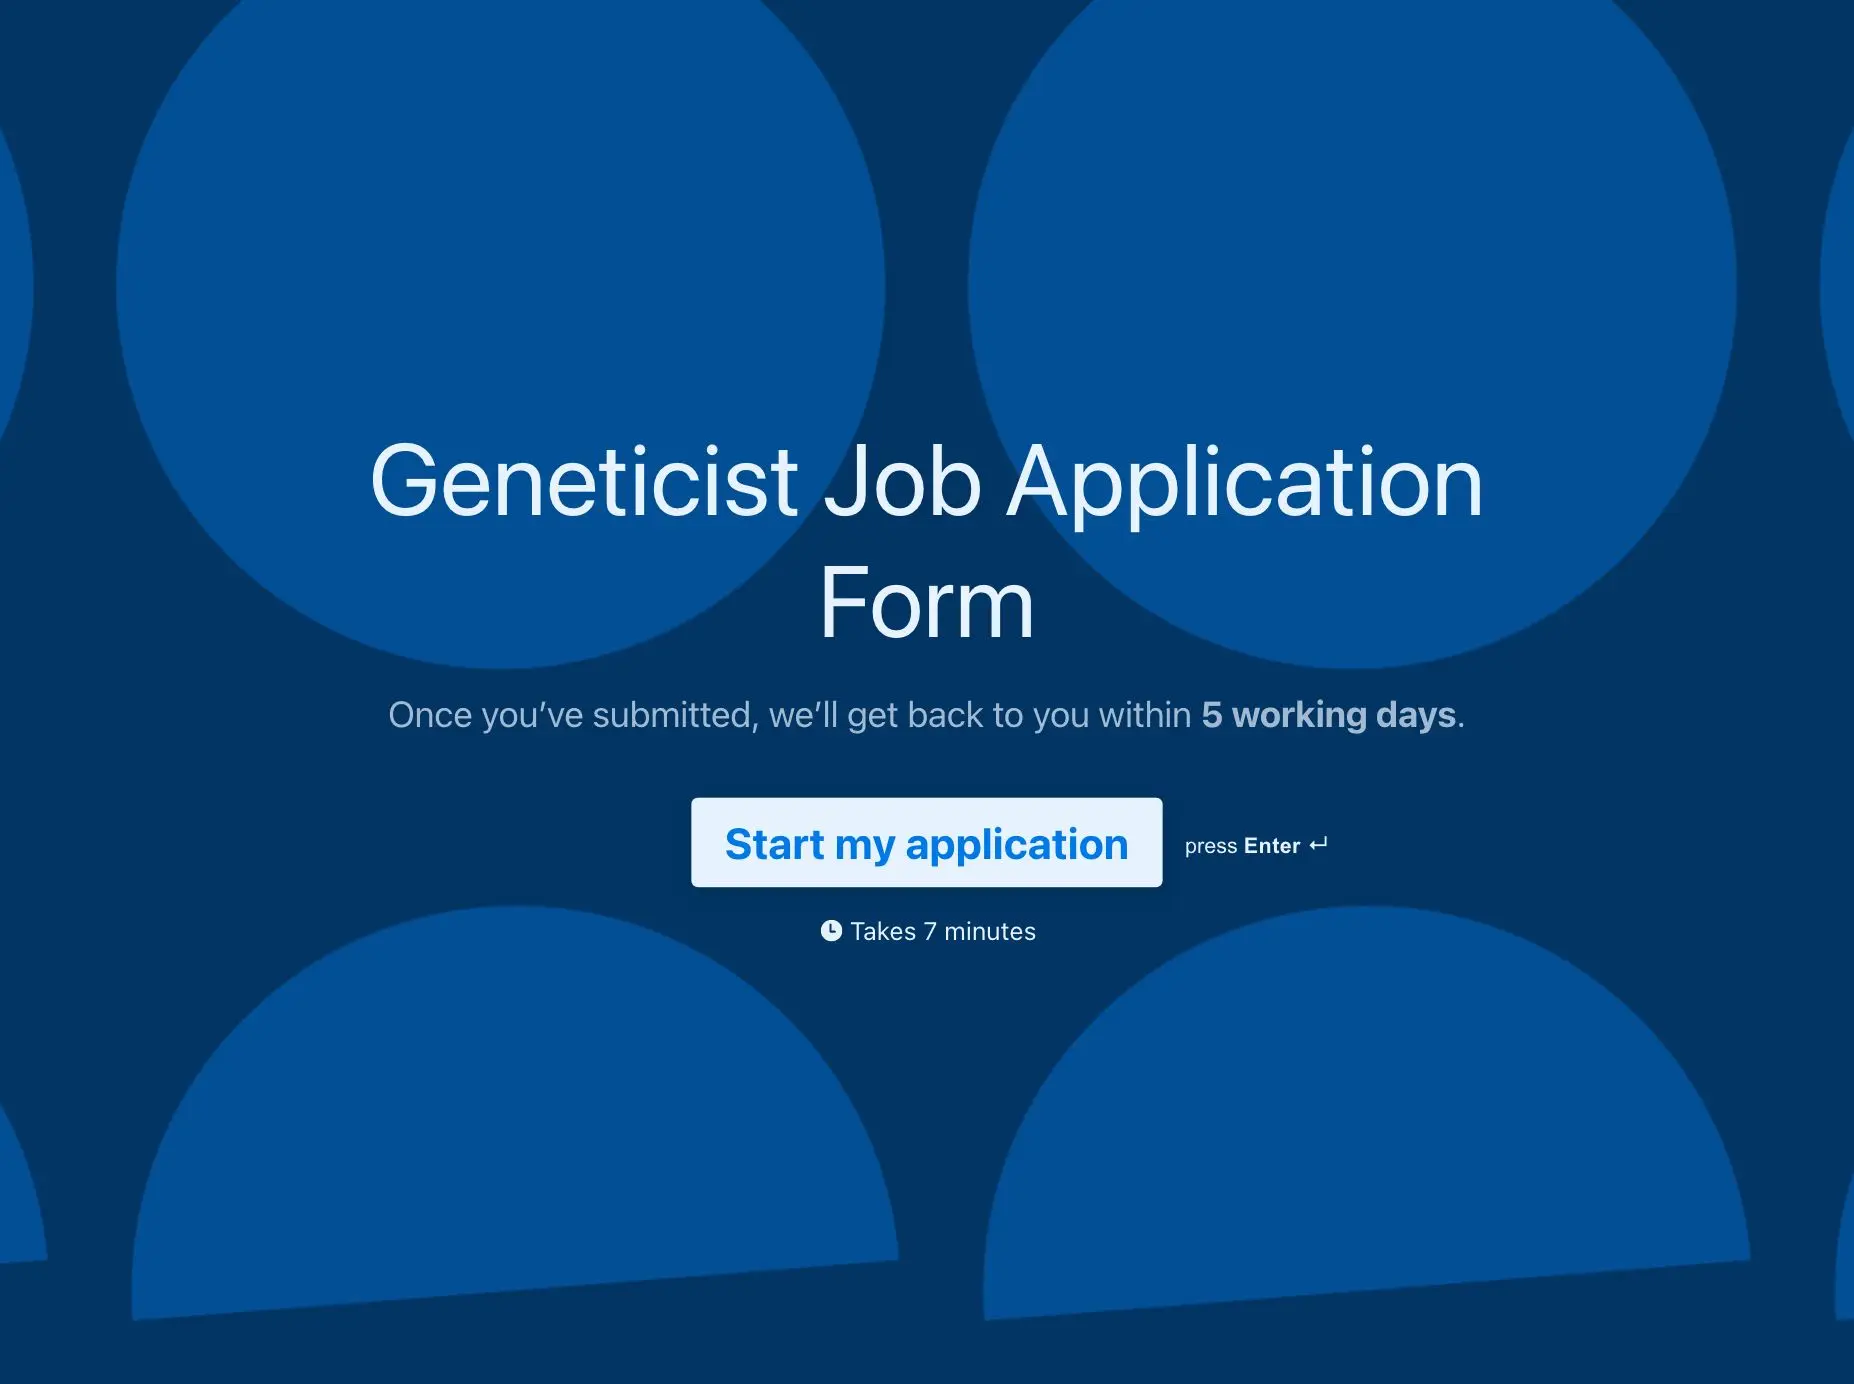 Geneticist Job Application Form Template Hero